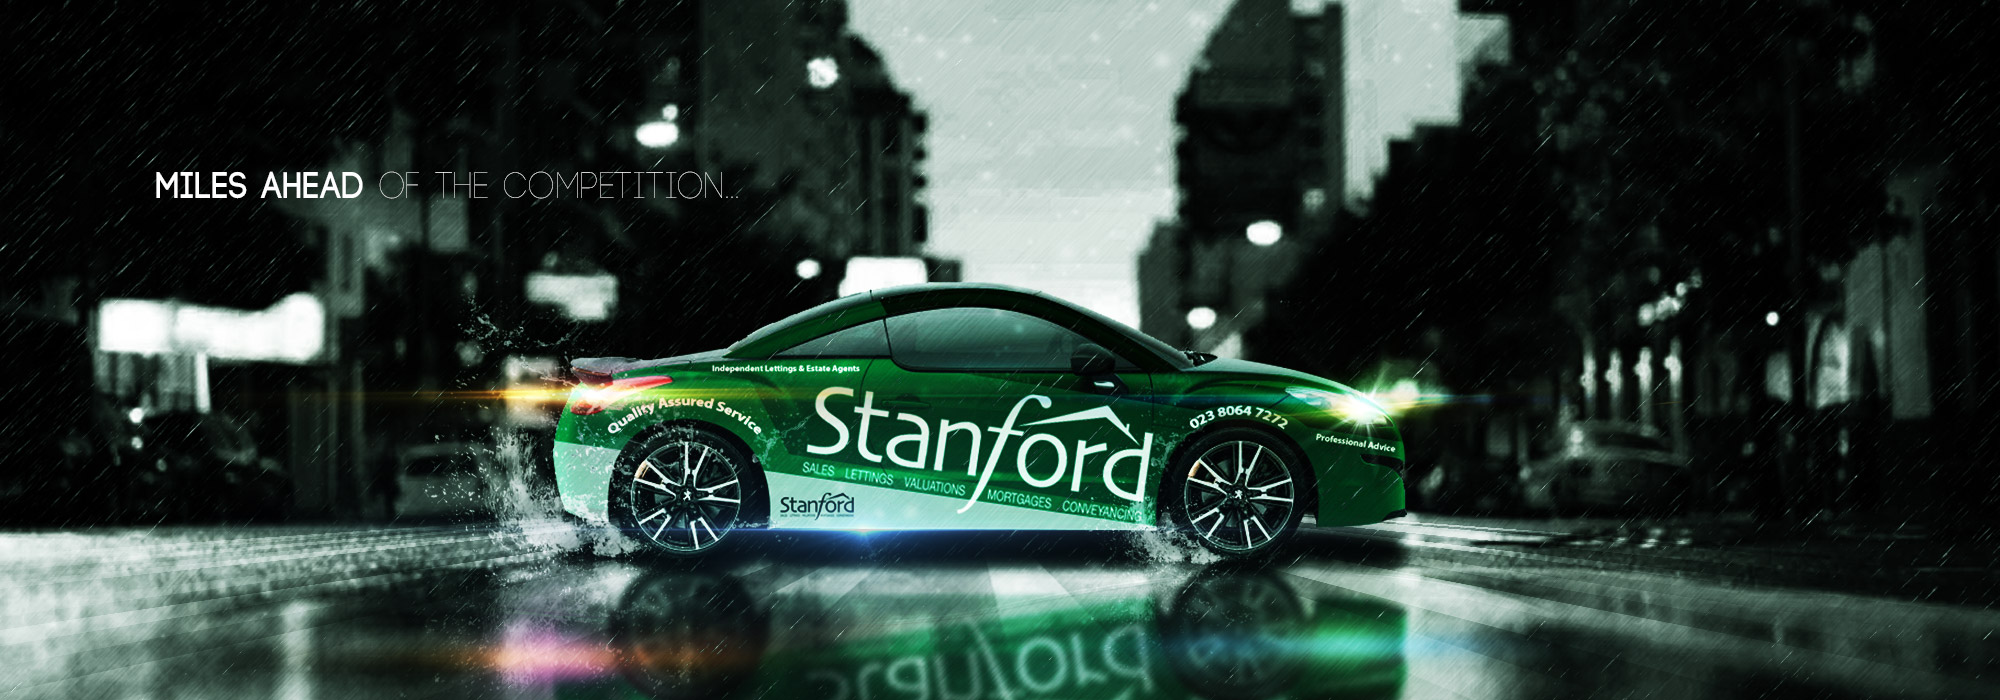 Stanford Car Wrap Design By Expressive Media